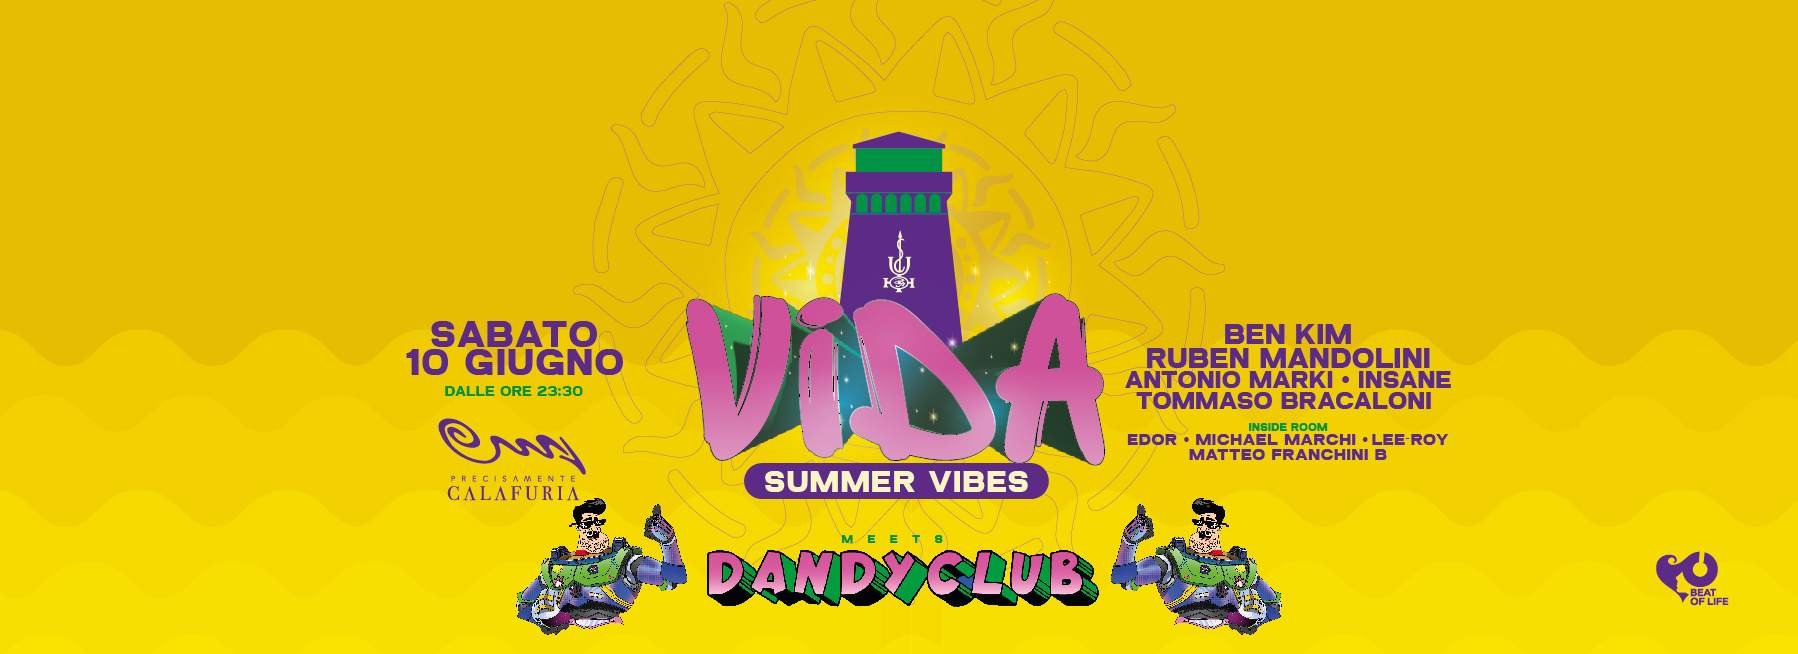 Vida Summer Vibes meets Dandy Club - フライヤー表